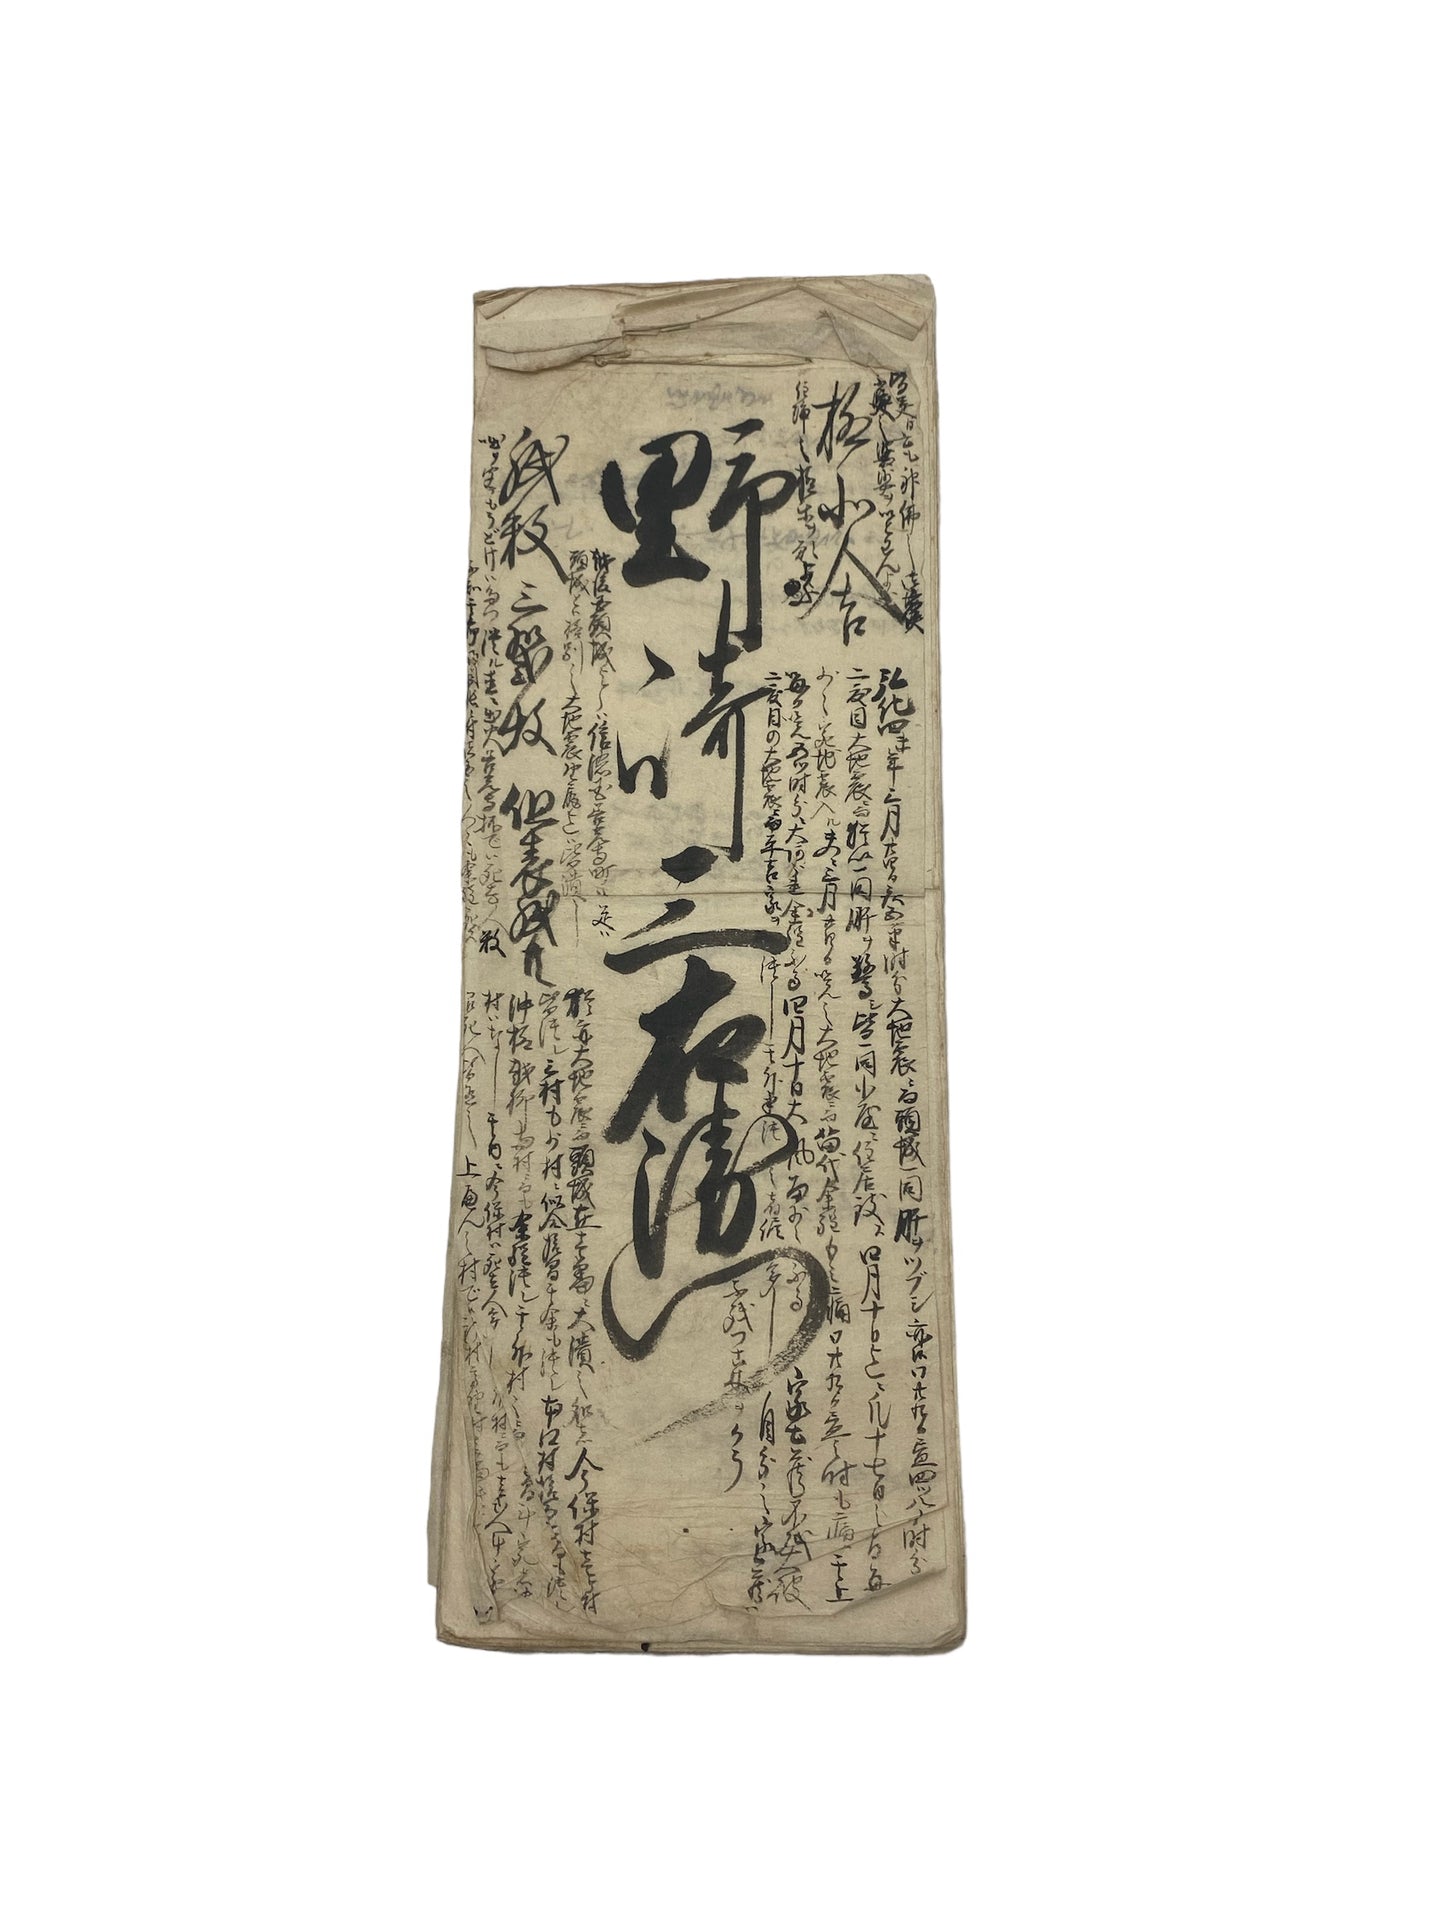 Handwritten merchant shop ledgers from the Edo period 1847